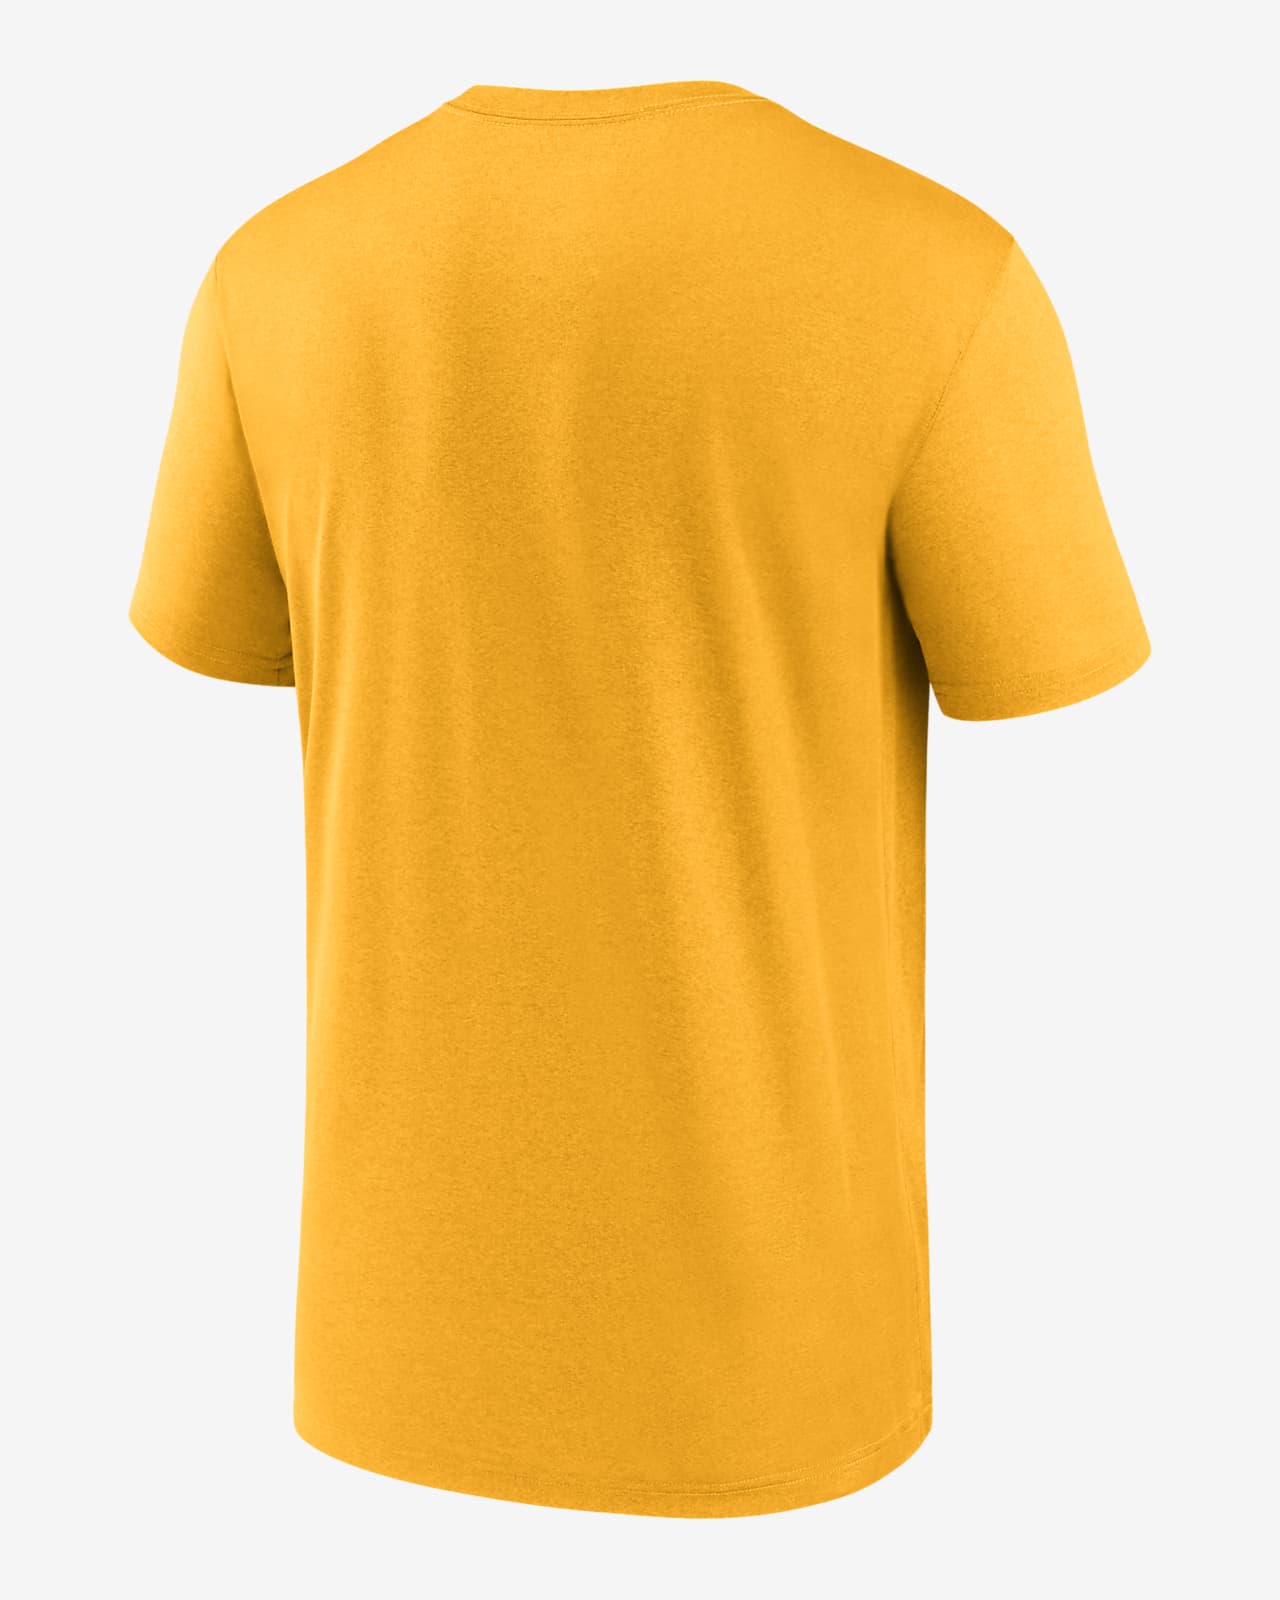 Nike Dri-FIT Icon Legend (MLB San Diego Padres) Men's T-Shirt